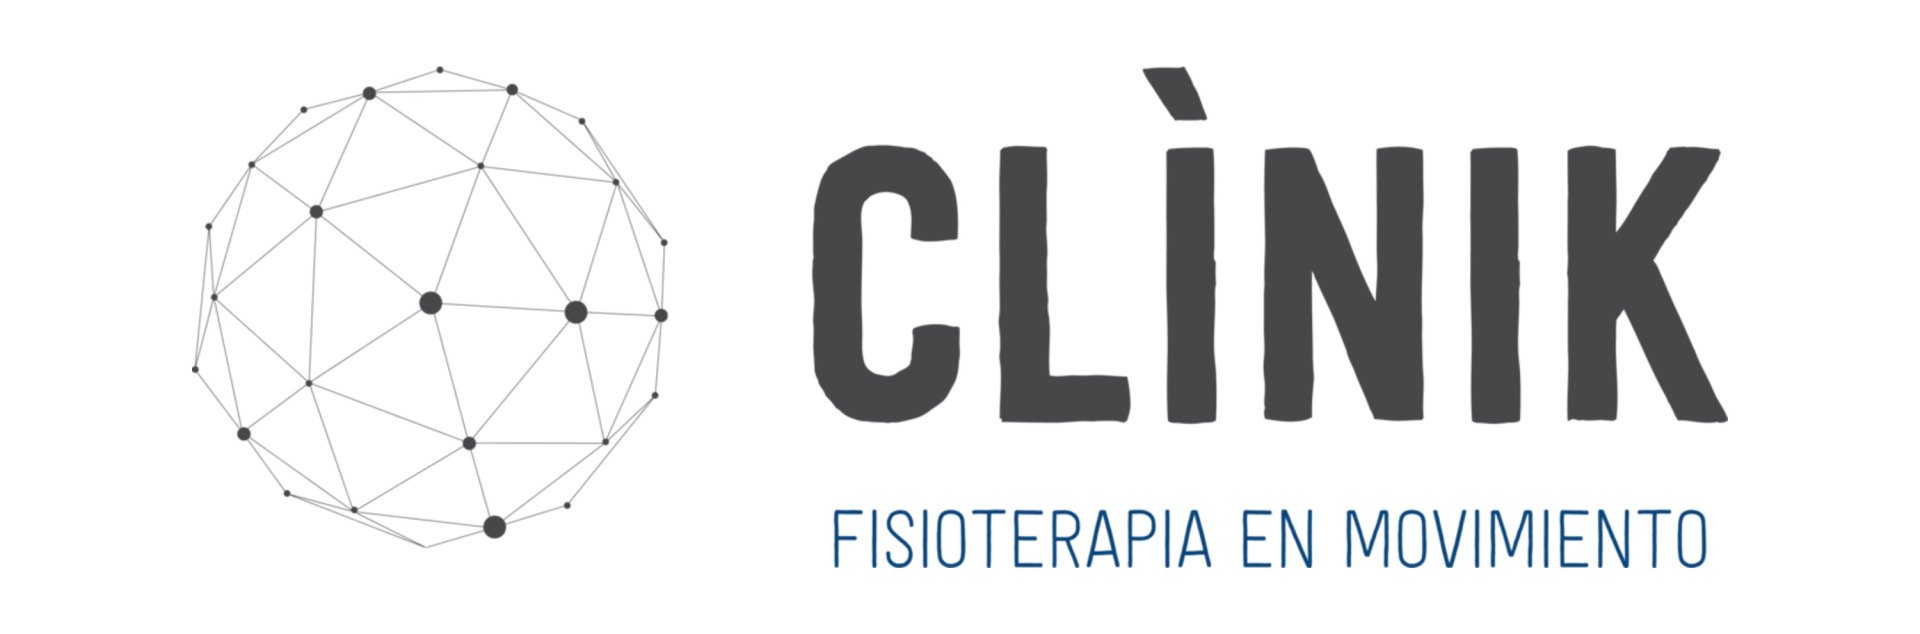 logo_clinik_fisioterapia